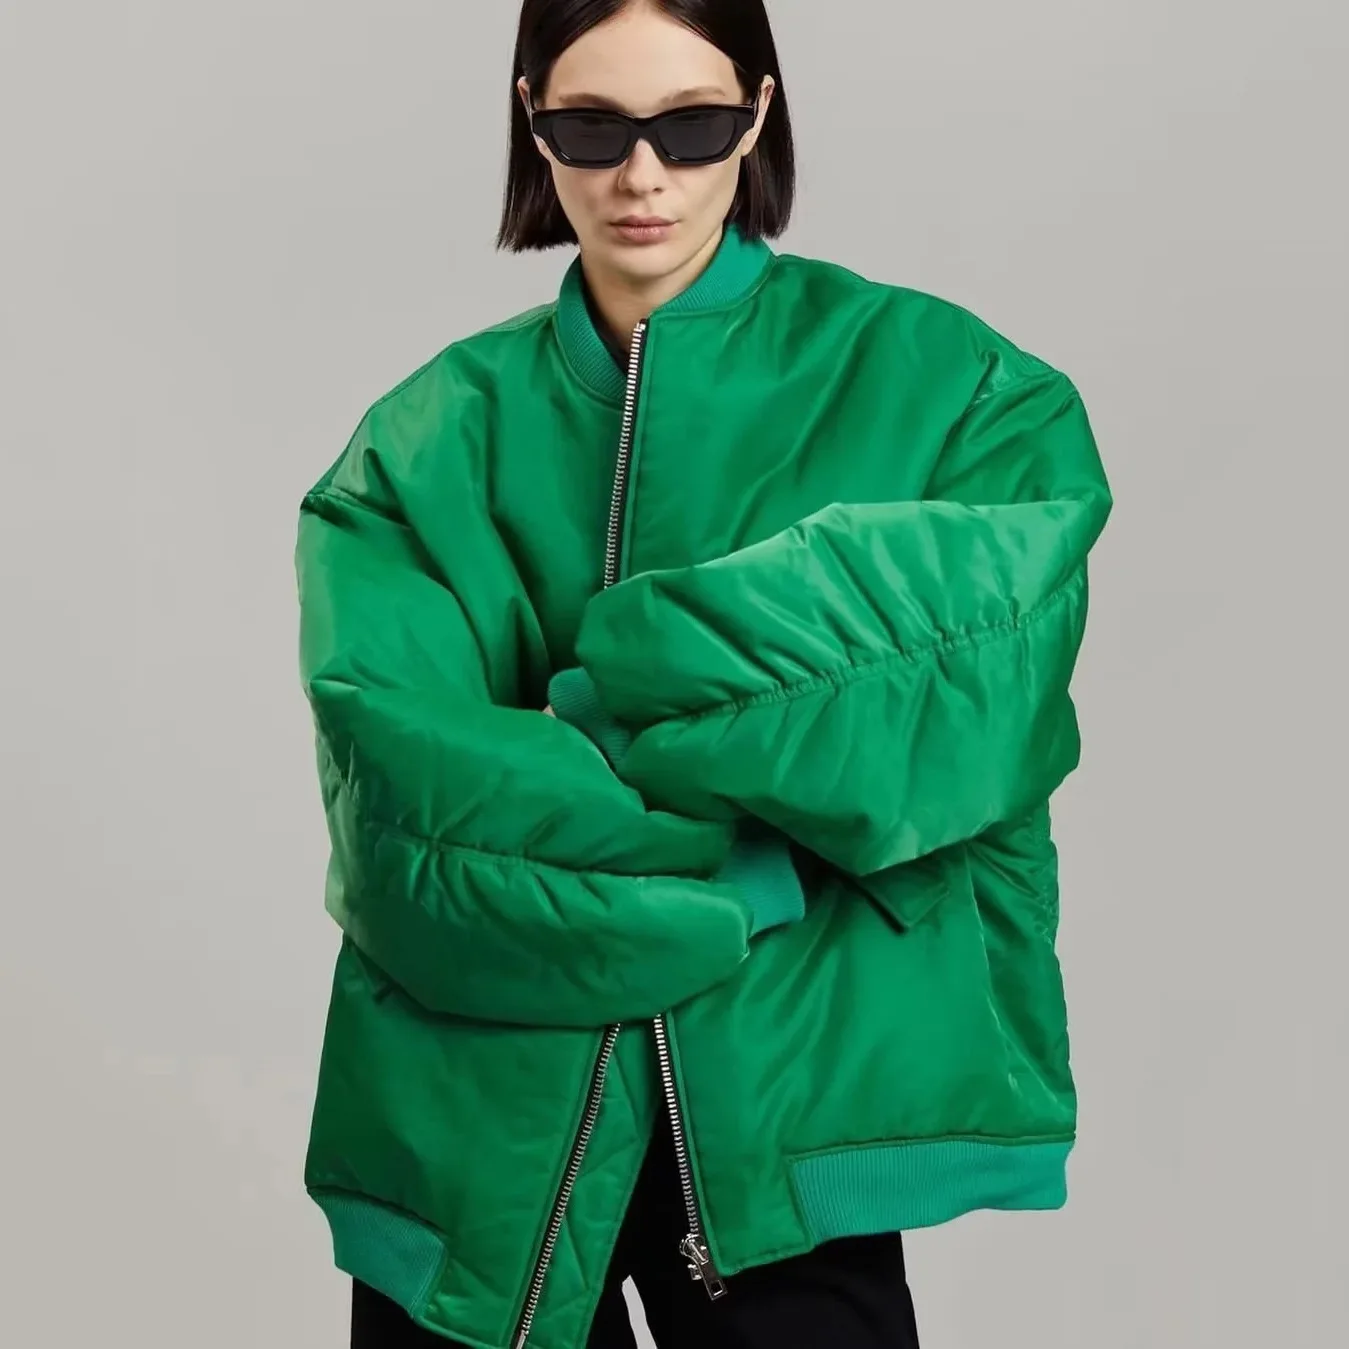 Ueteey 2022 New Women's Street Style Loose Jacket Cotton Jacket Women's Jacket Coat